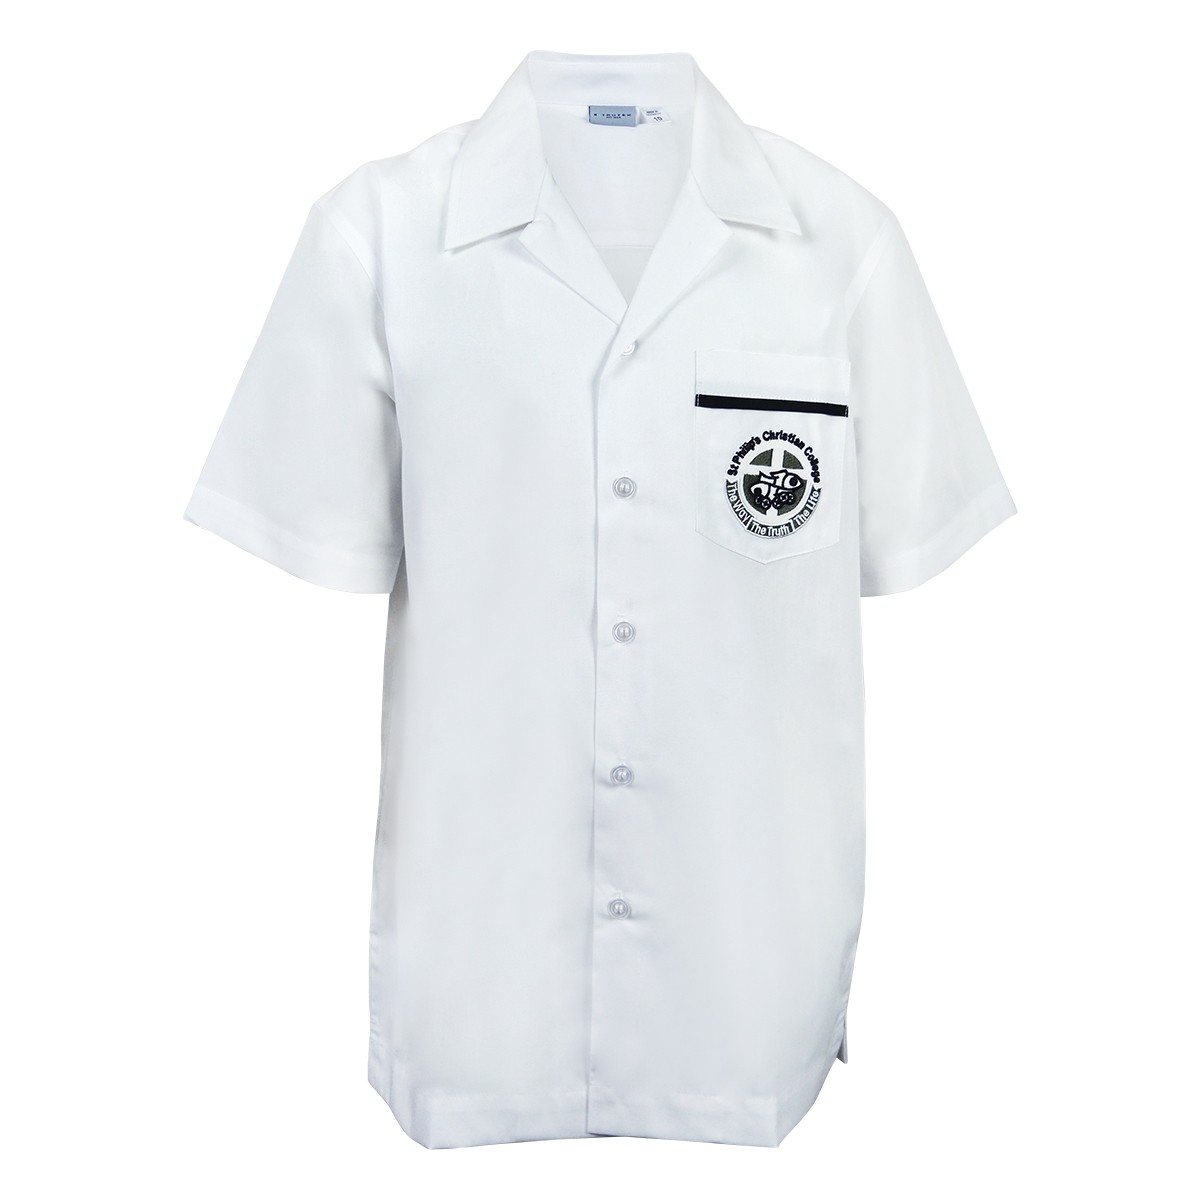 Shirt Over Boys White - St Philip's Christian College Uniform Shop